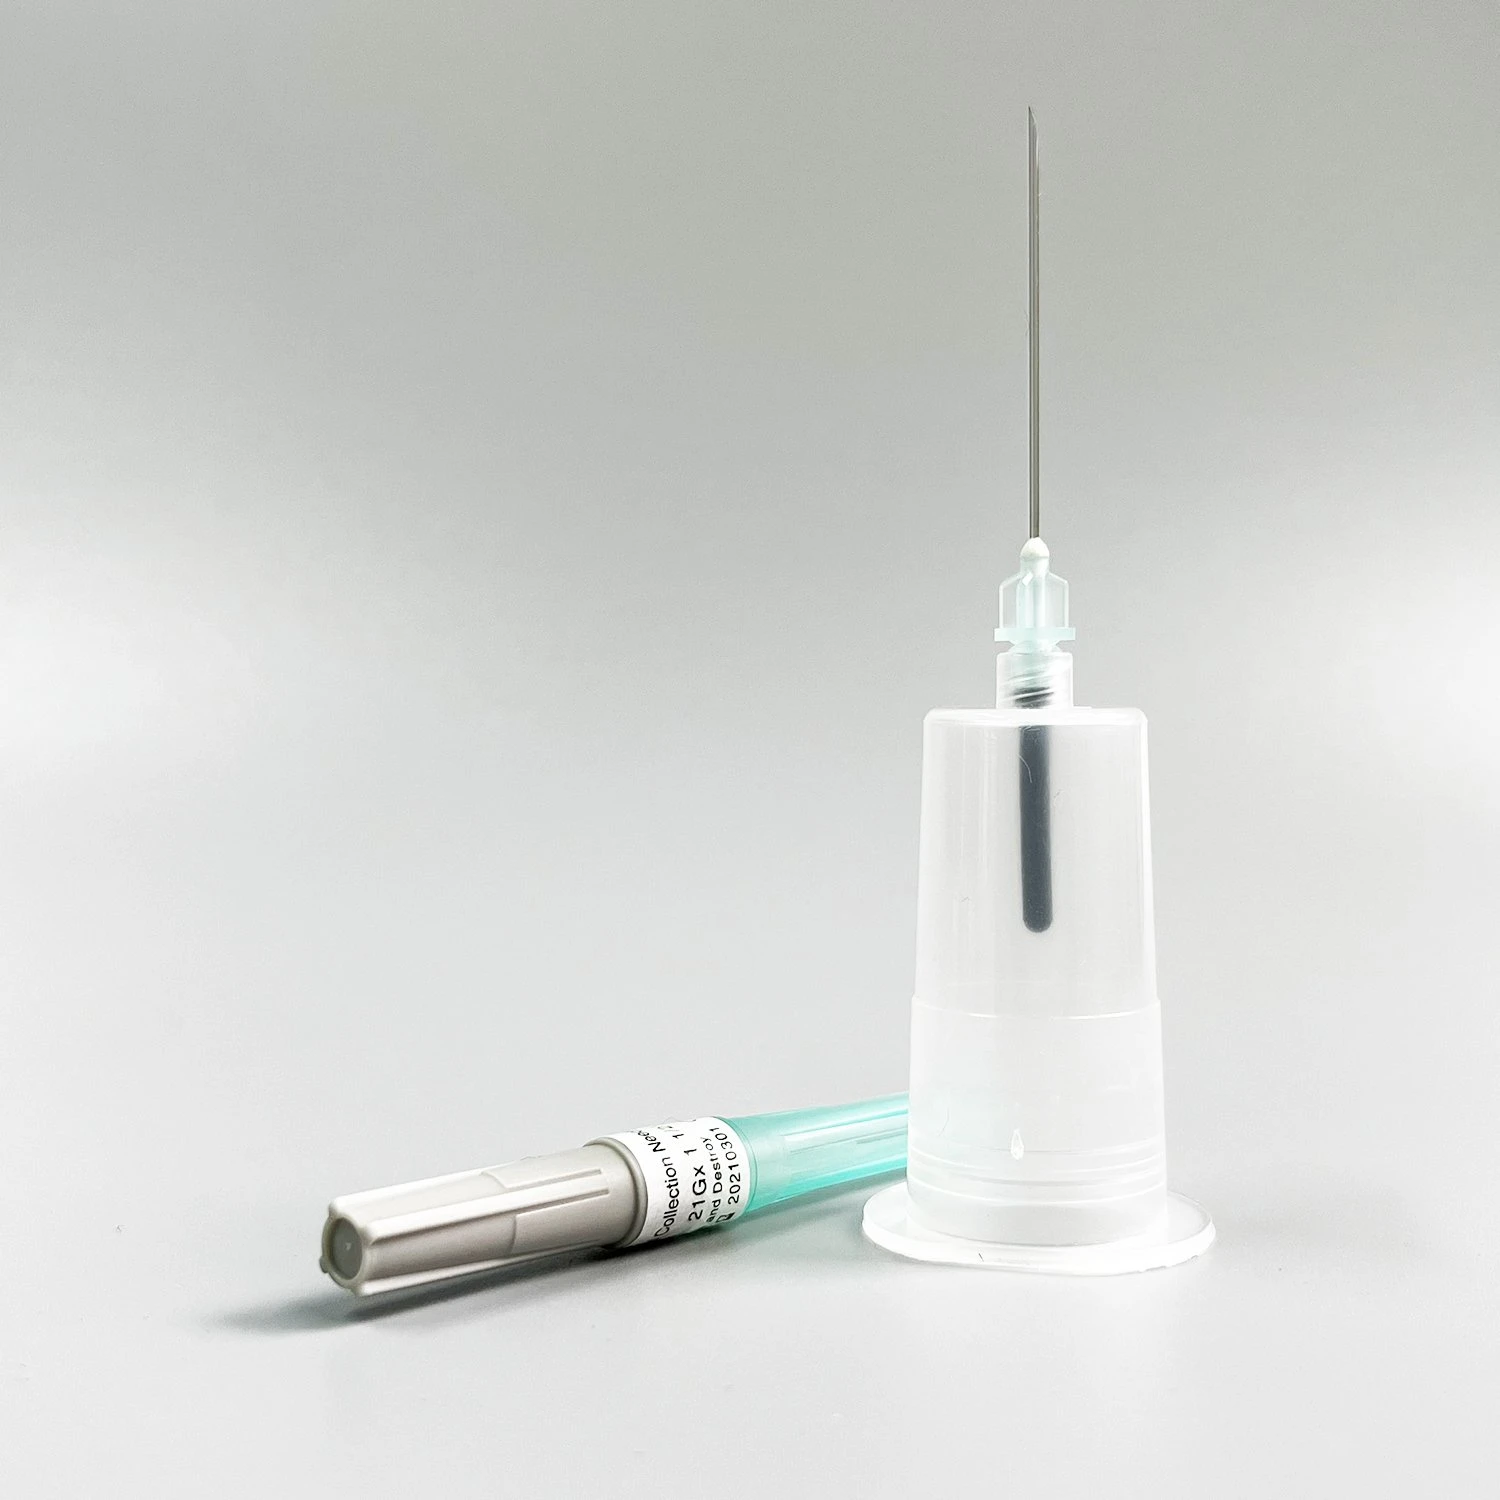 Agulha de amostragem de sangue multi-amostra estéril tipo caneta